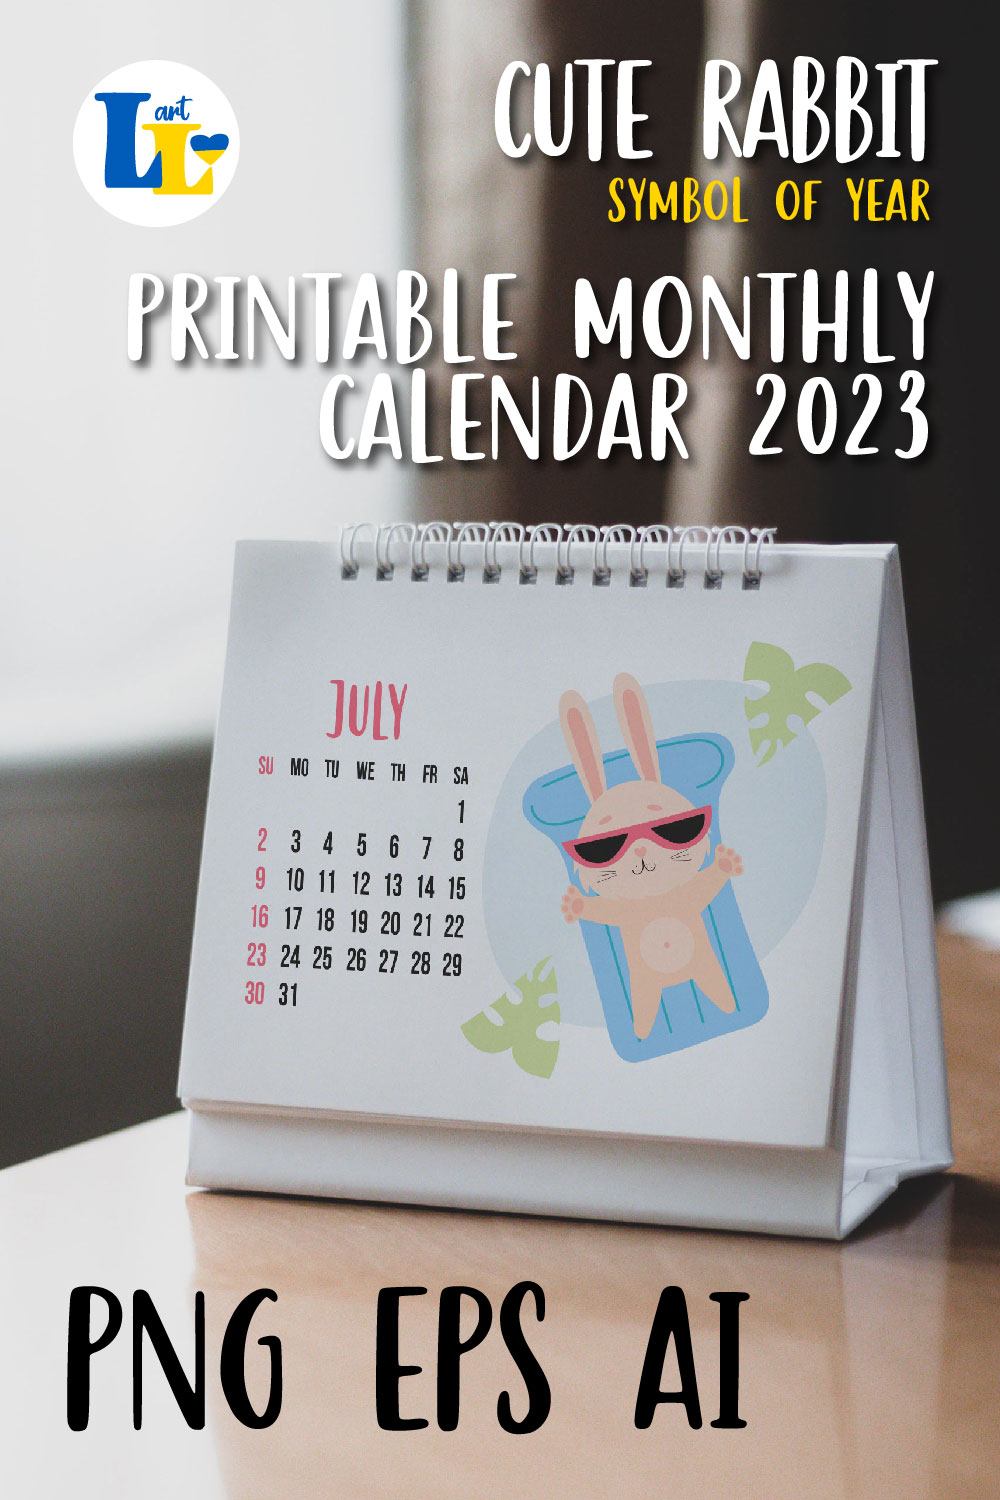 Printable Monthly Template Calendar 2023 pinterest image.